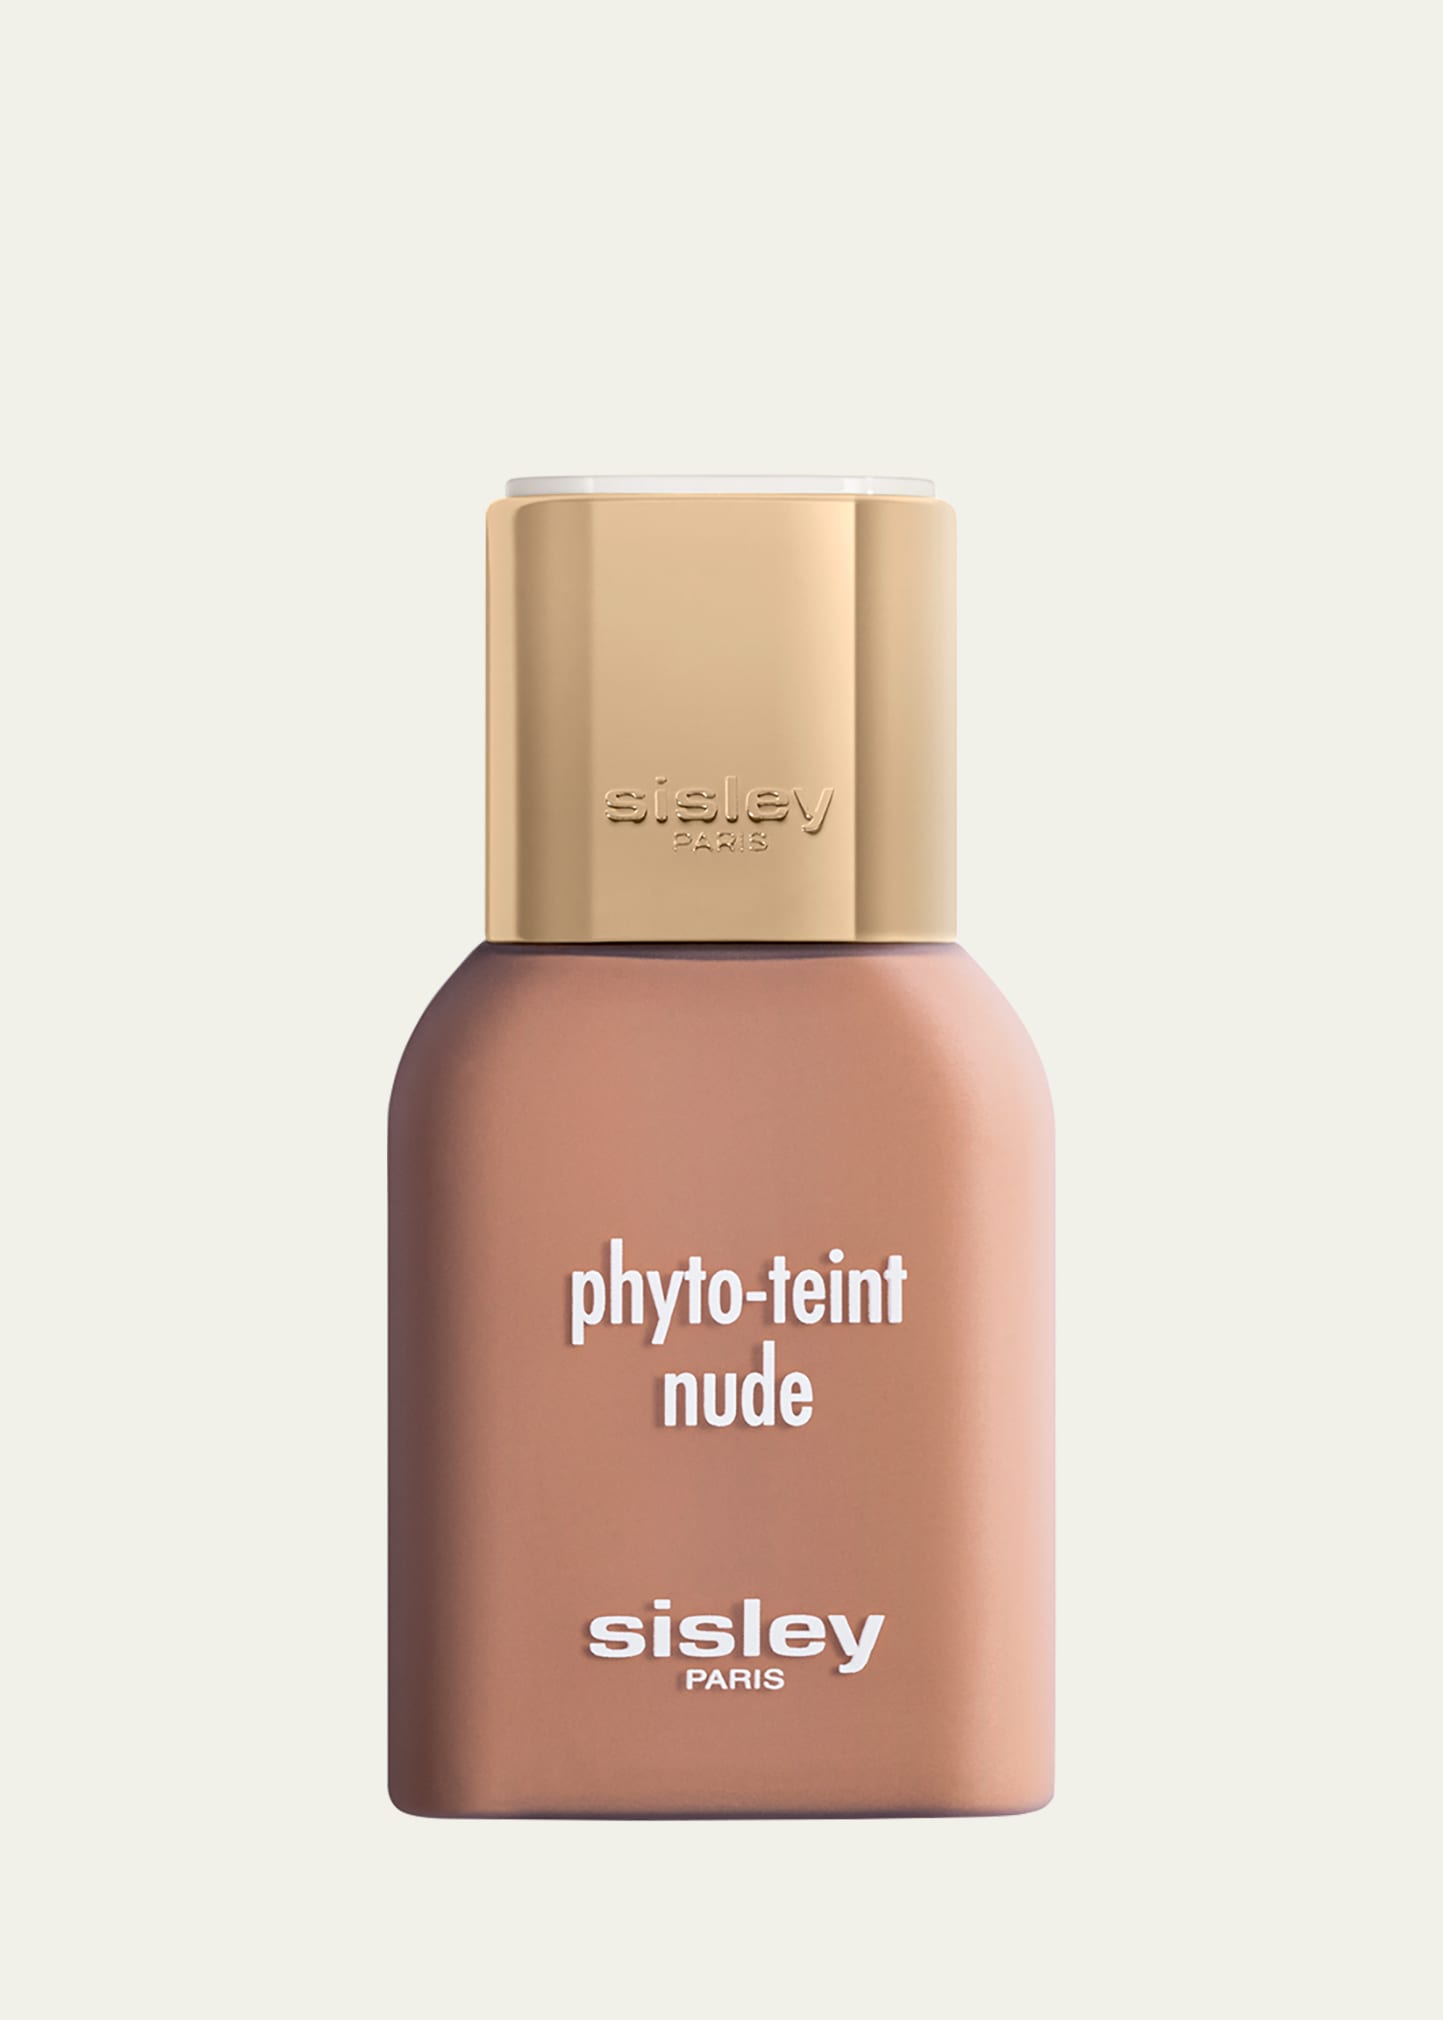 Phyto-Teint Nude